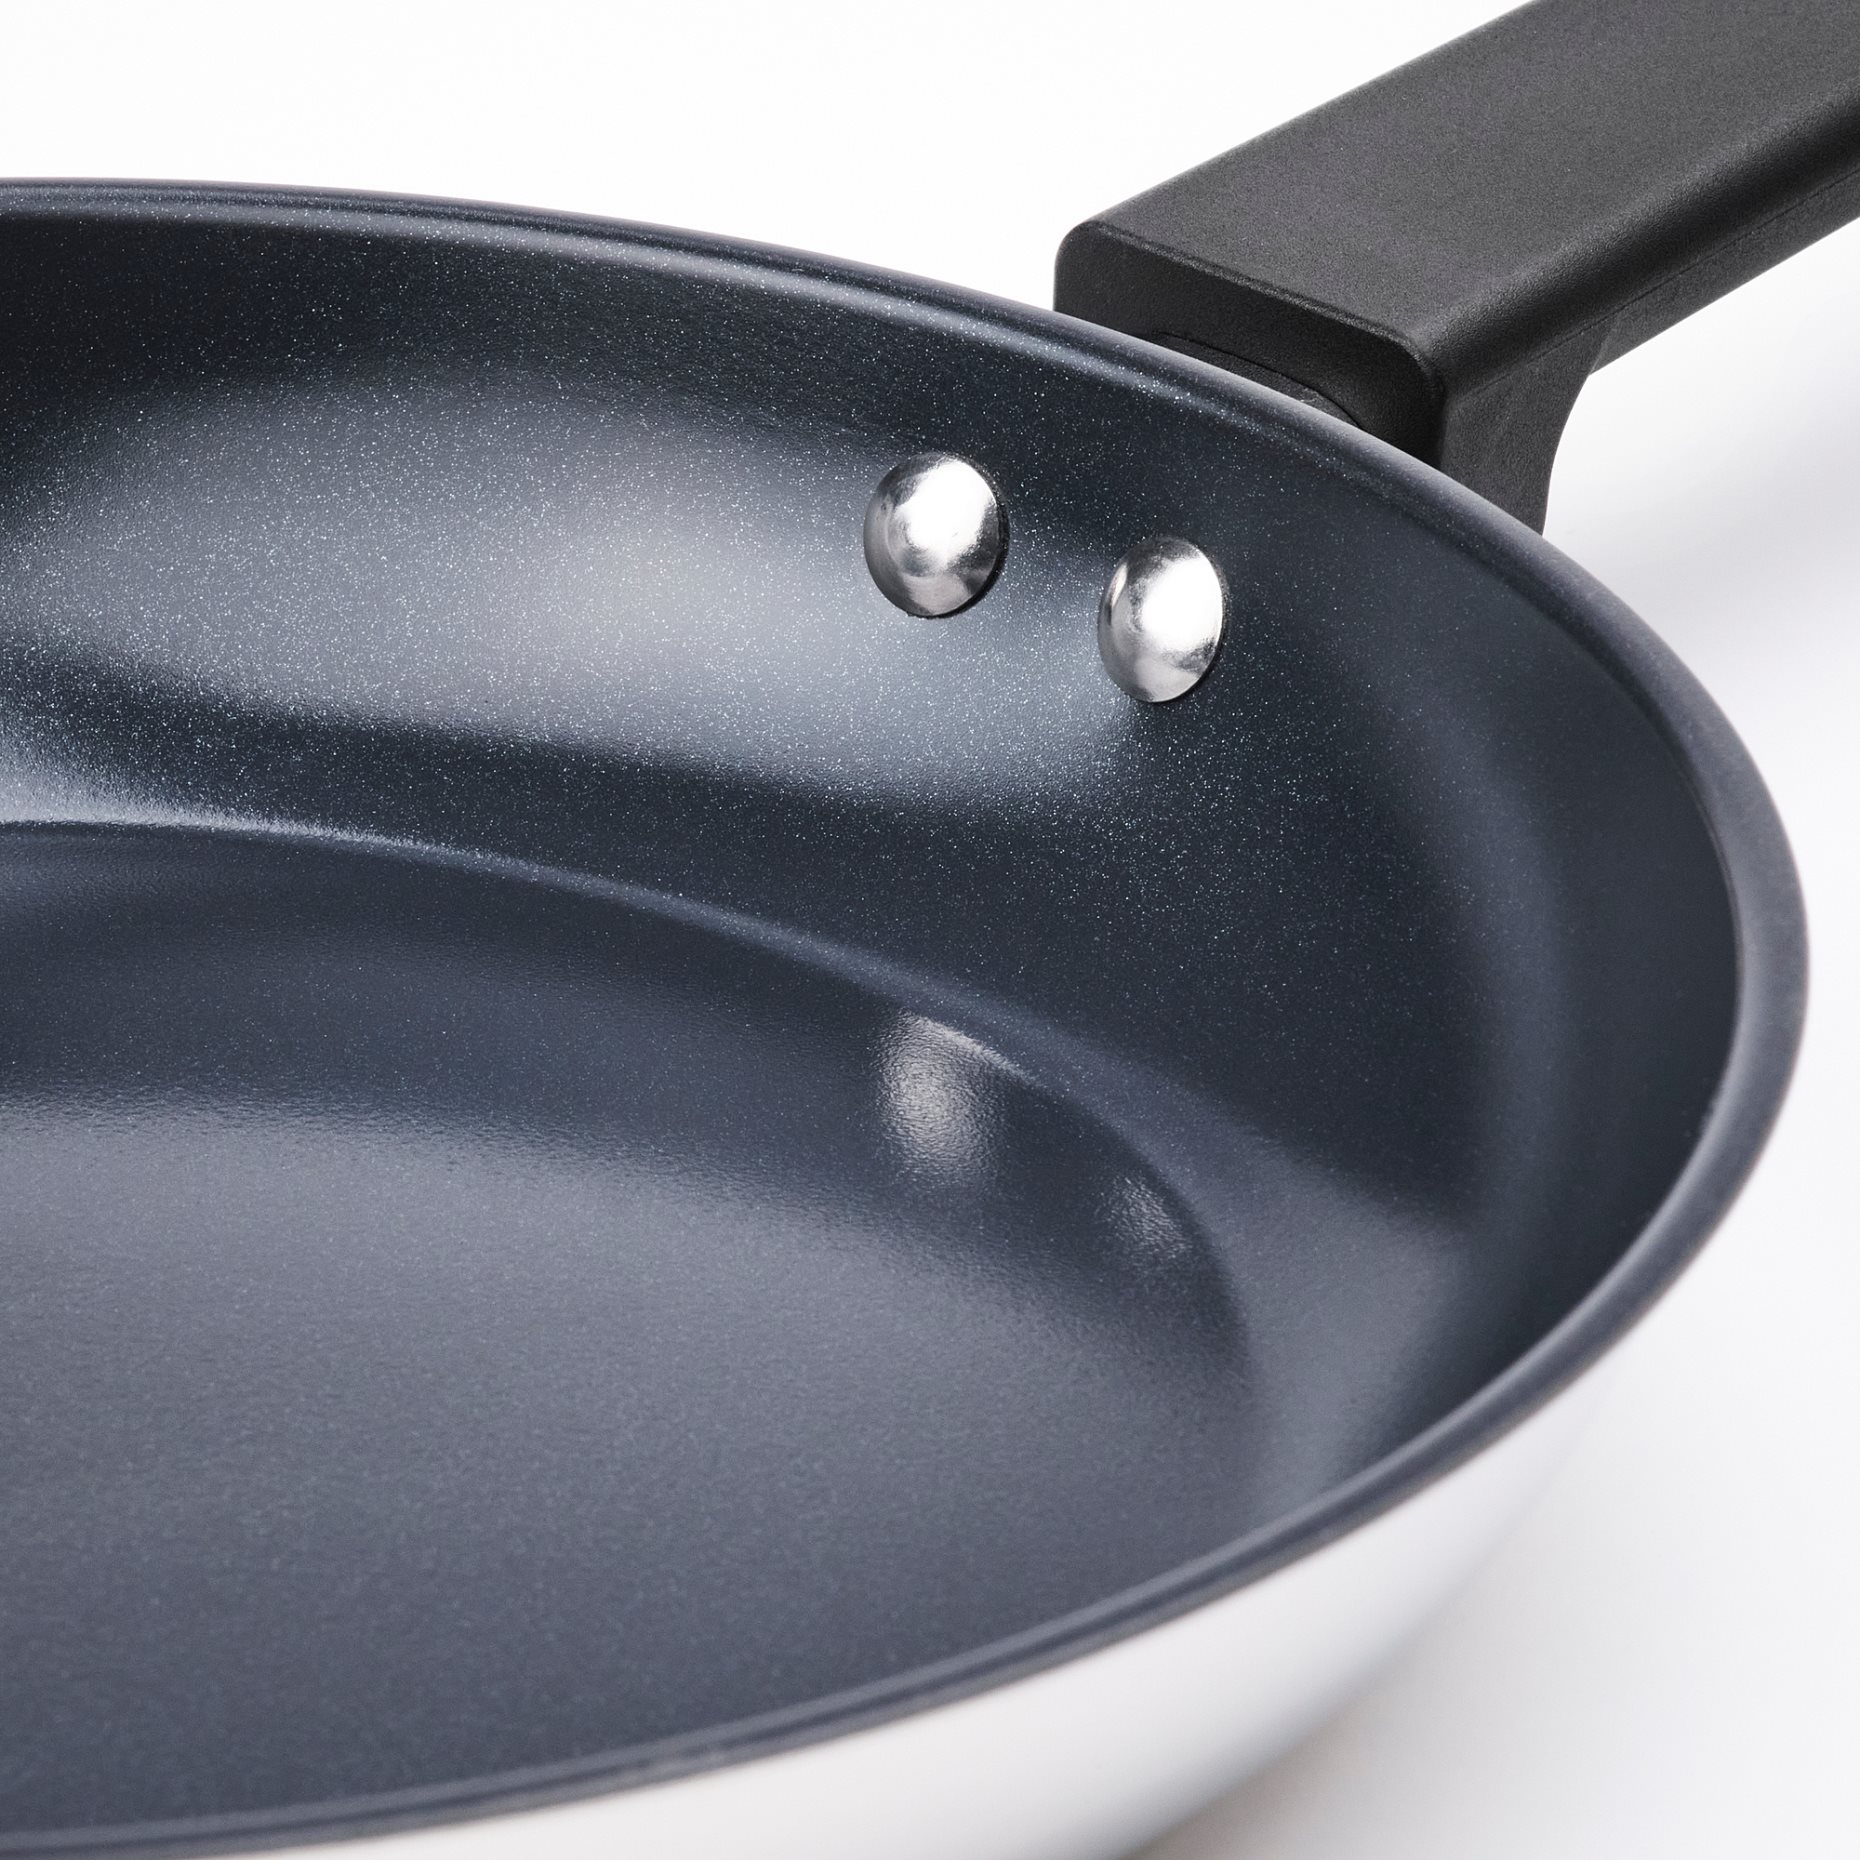 MIDDAGSMAT, frying pan/non-stick coating, 24 cm, 005.452.18